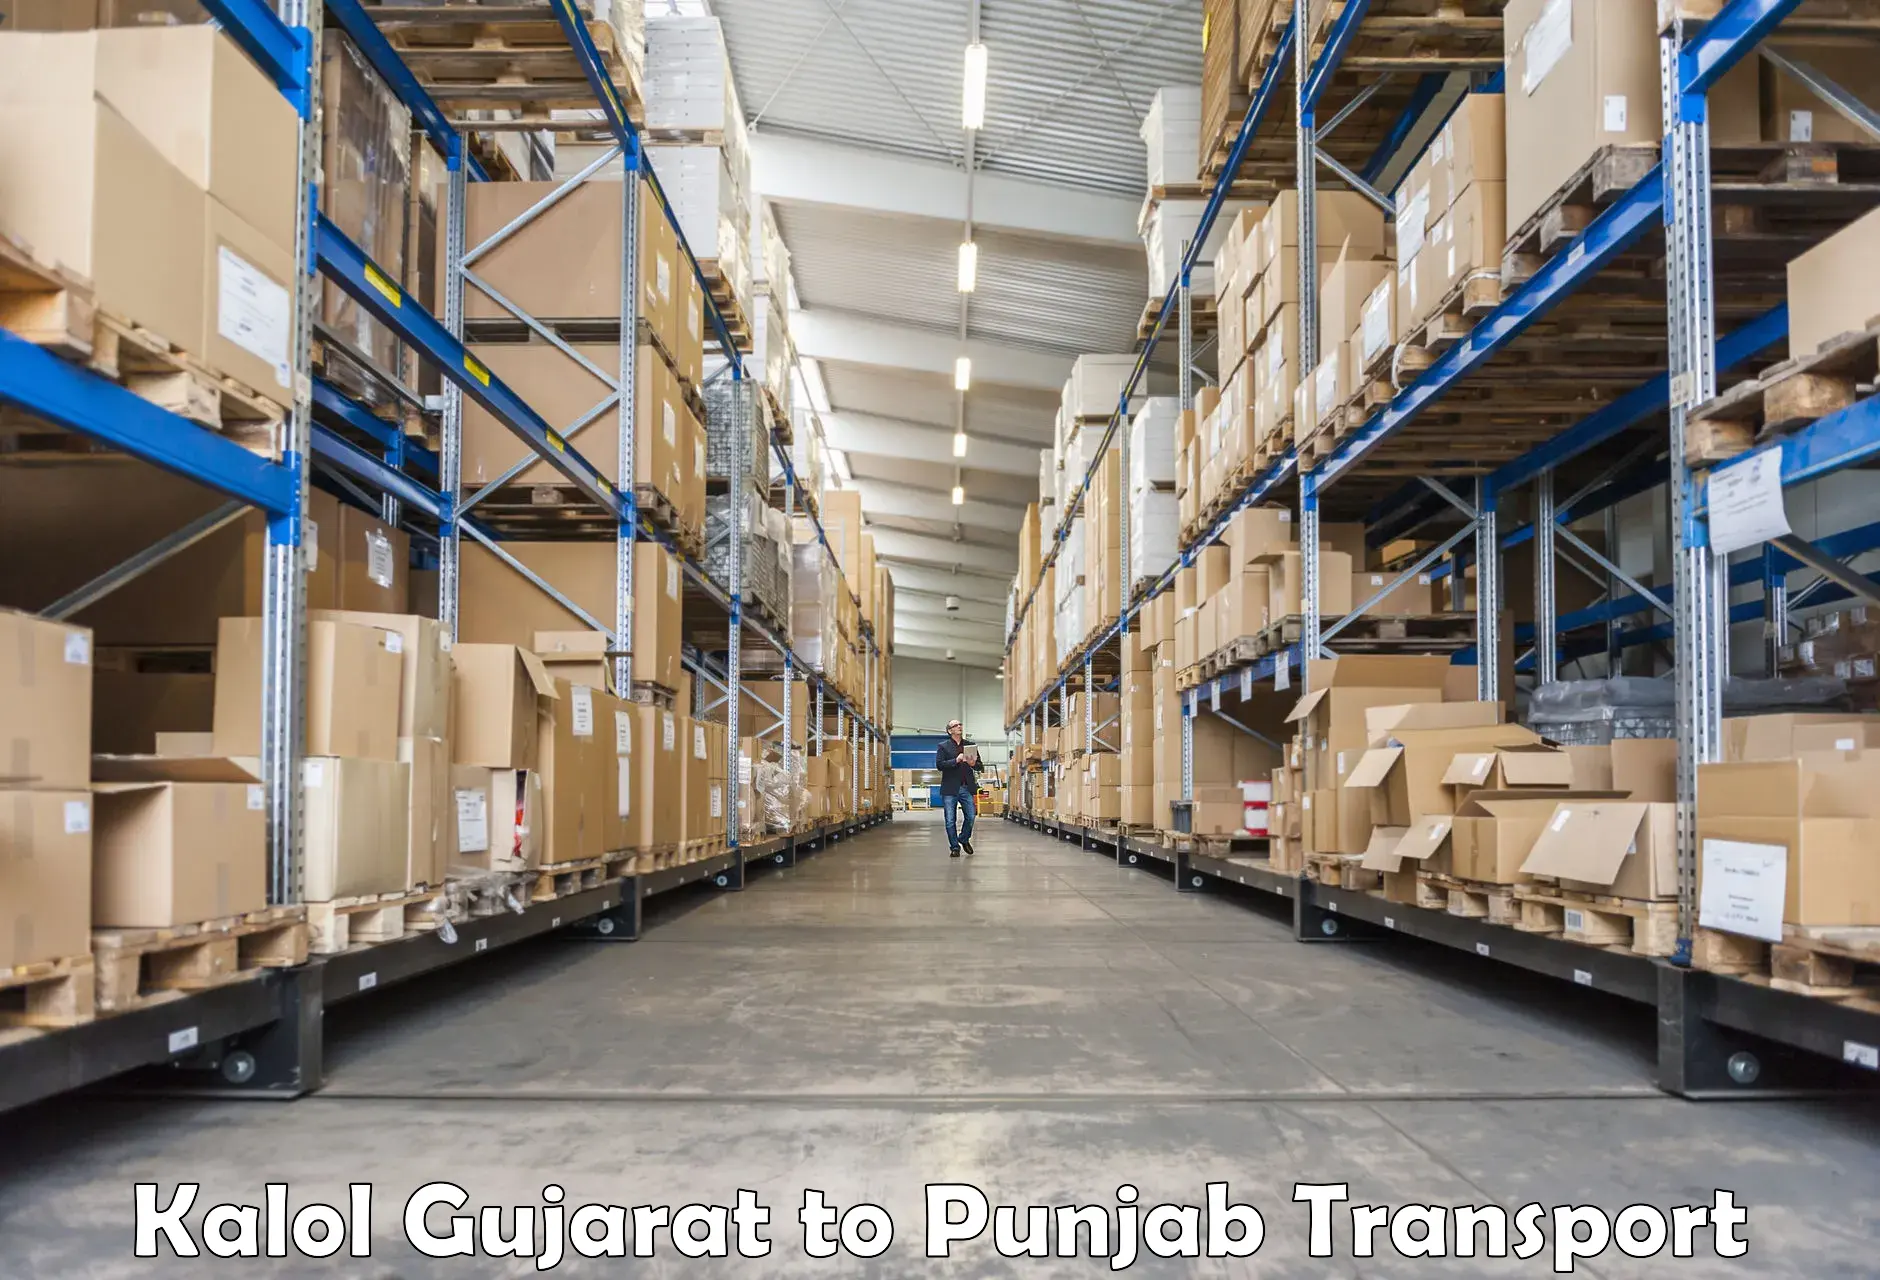 Goods delivery service Kalol Gujarat to Punjab